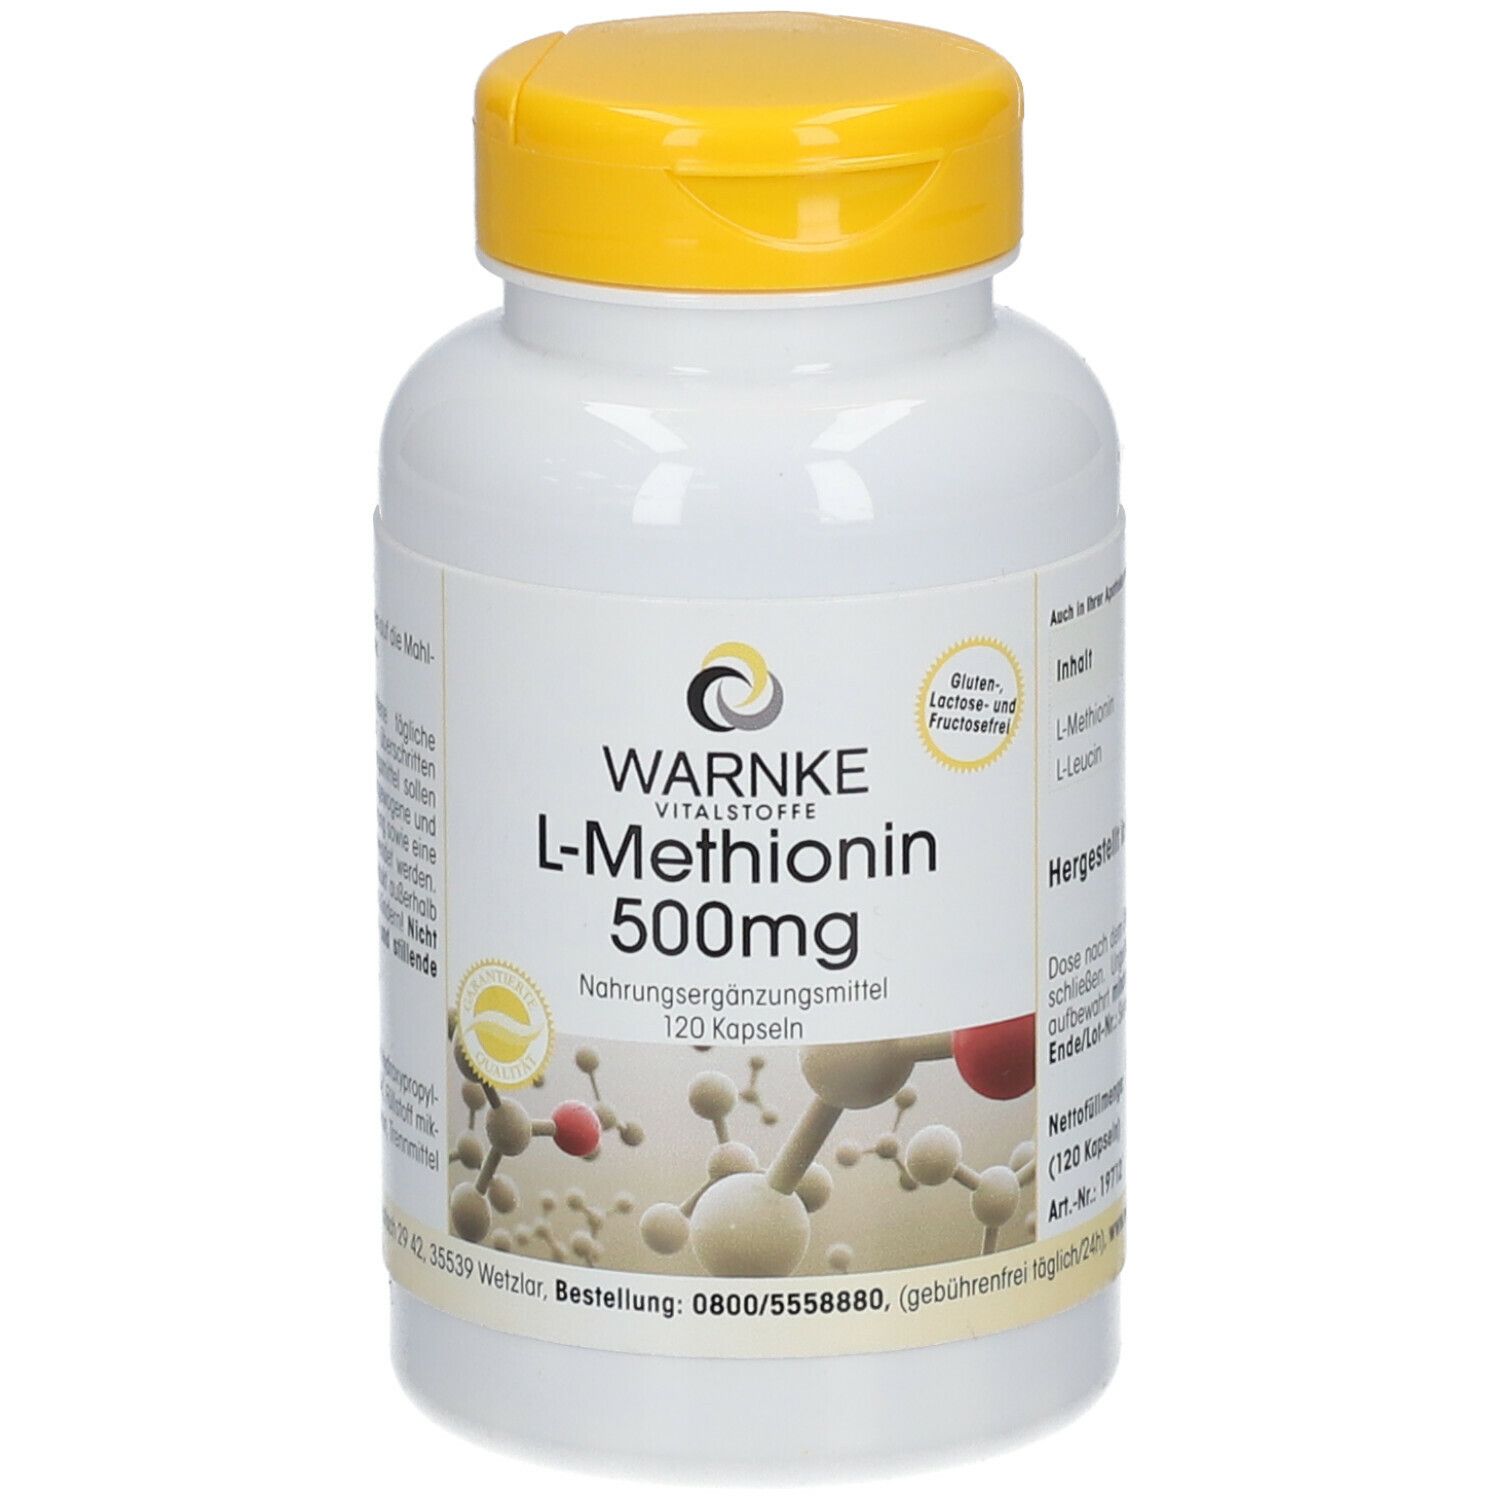 WARNKE L-Methionin